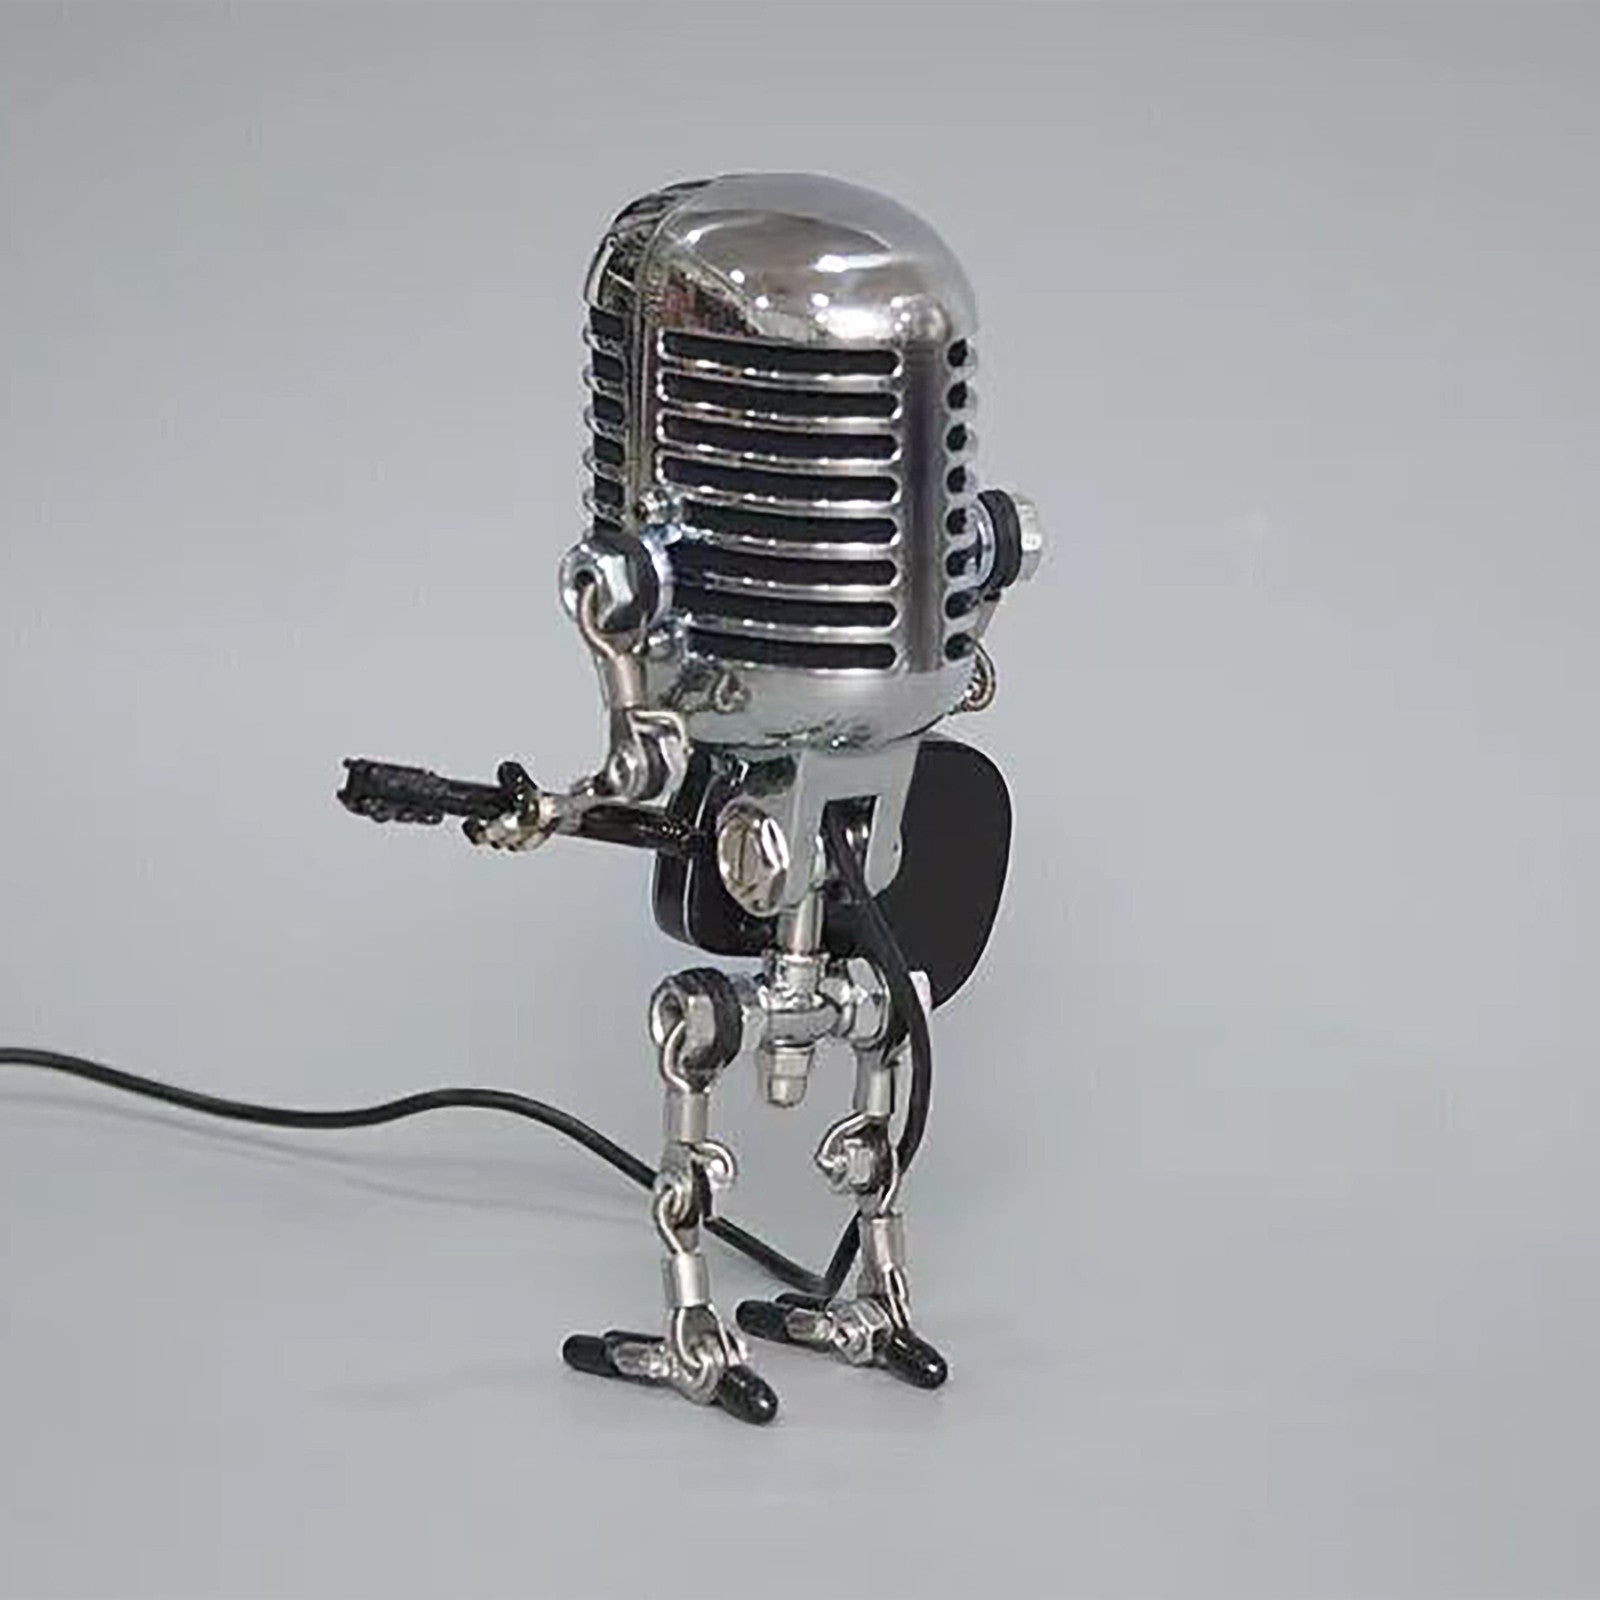 Vintage Guitar Playing Microphone Robot Lamp